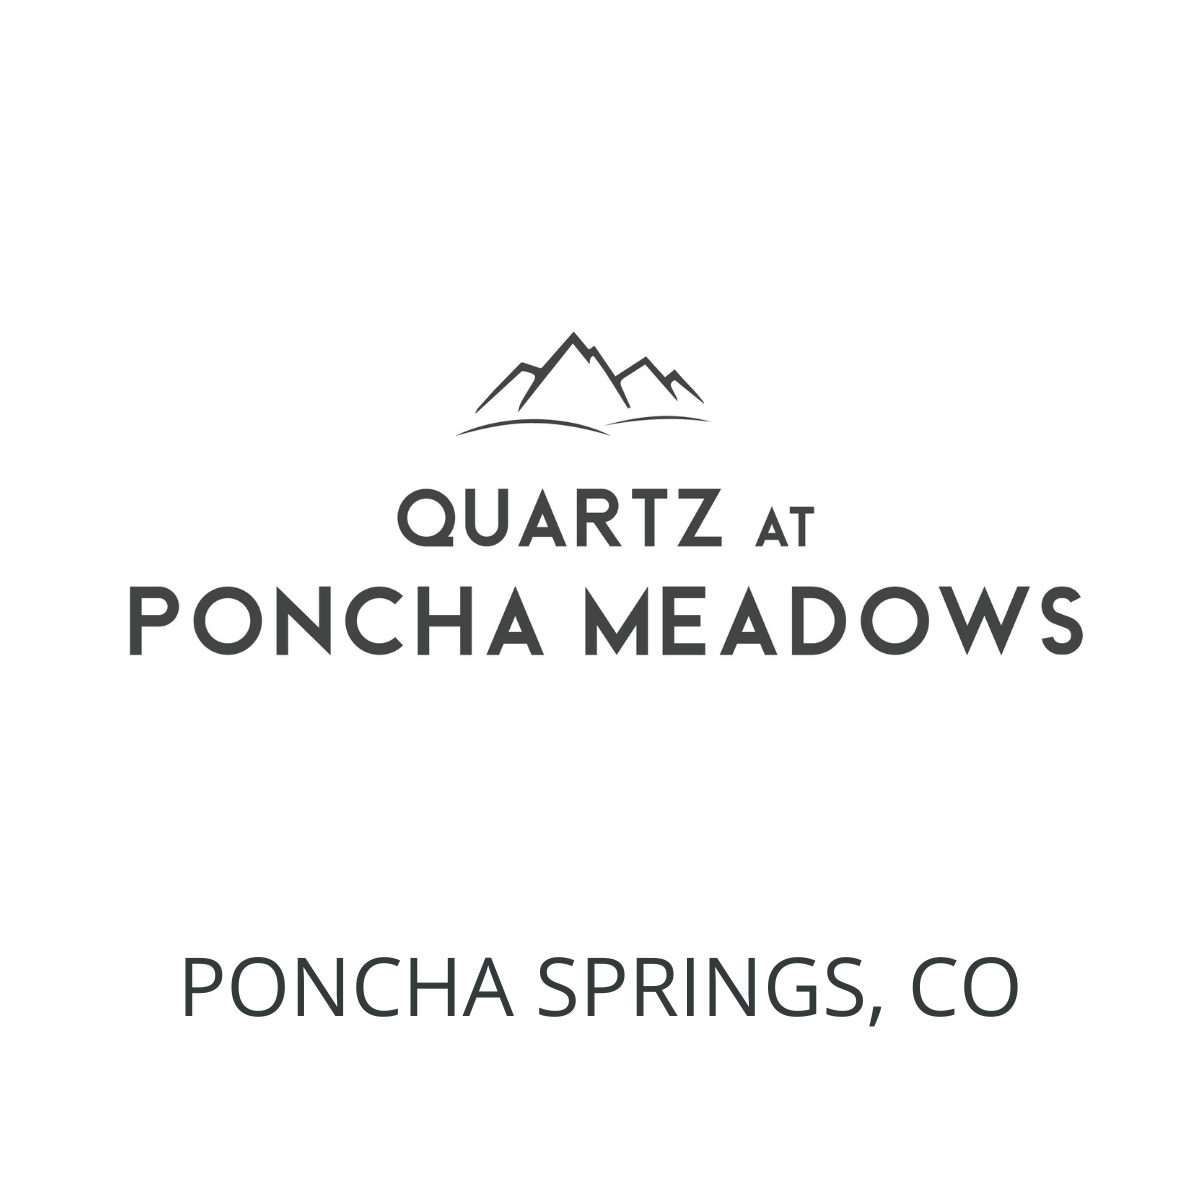 Poncha Meadows